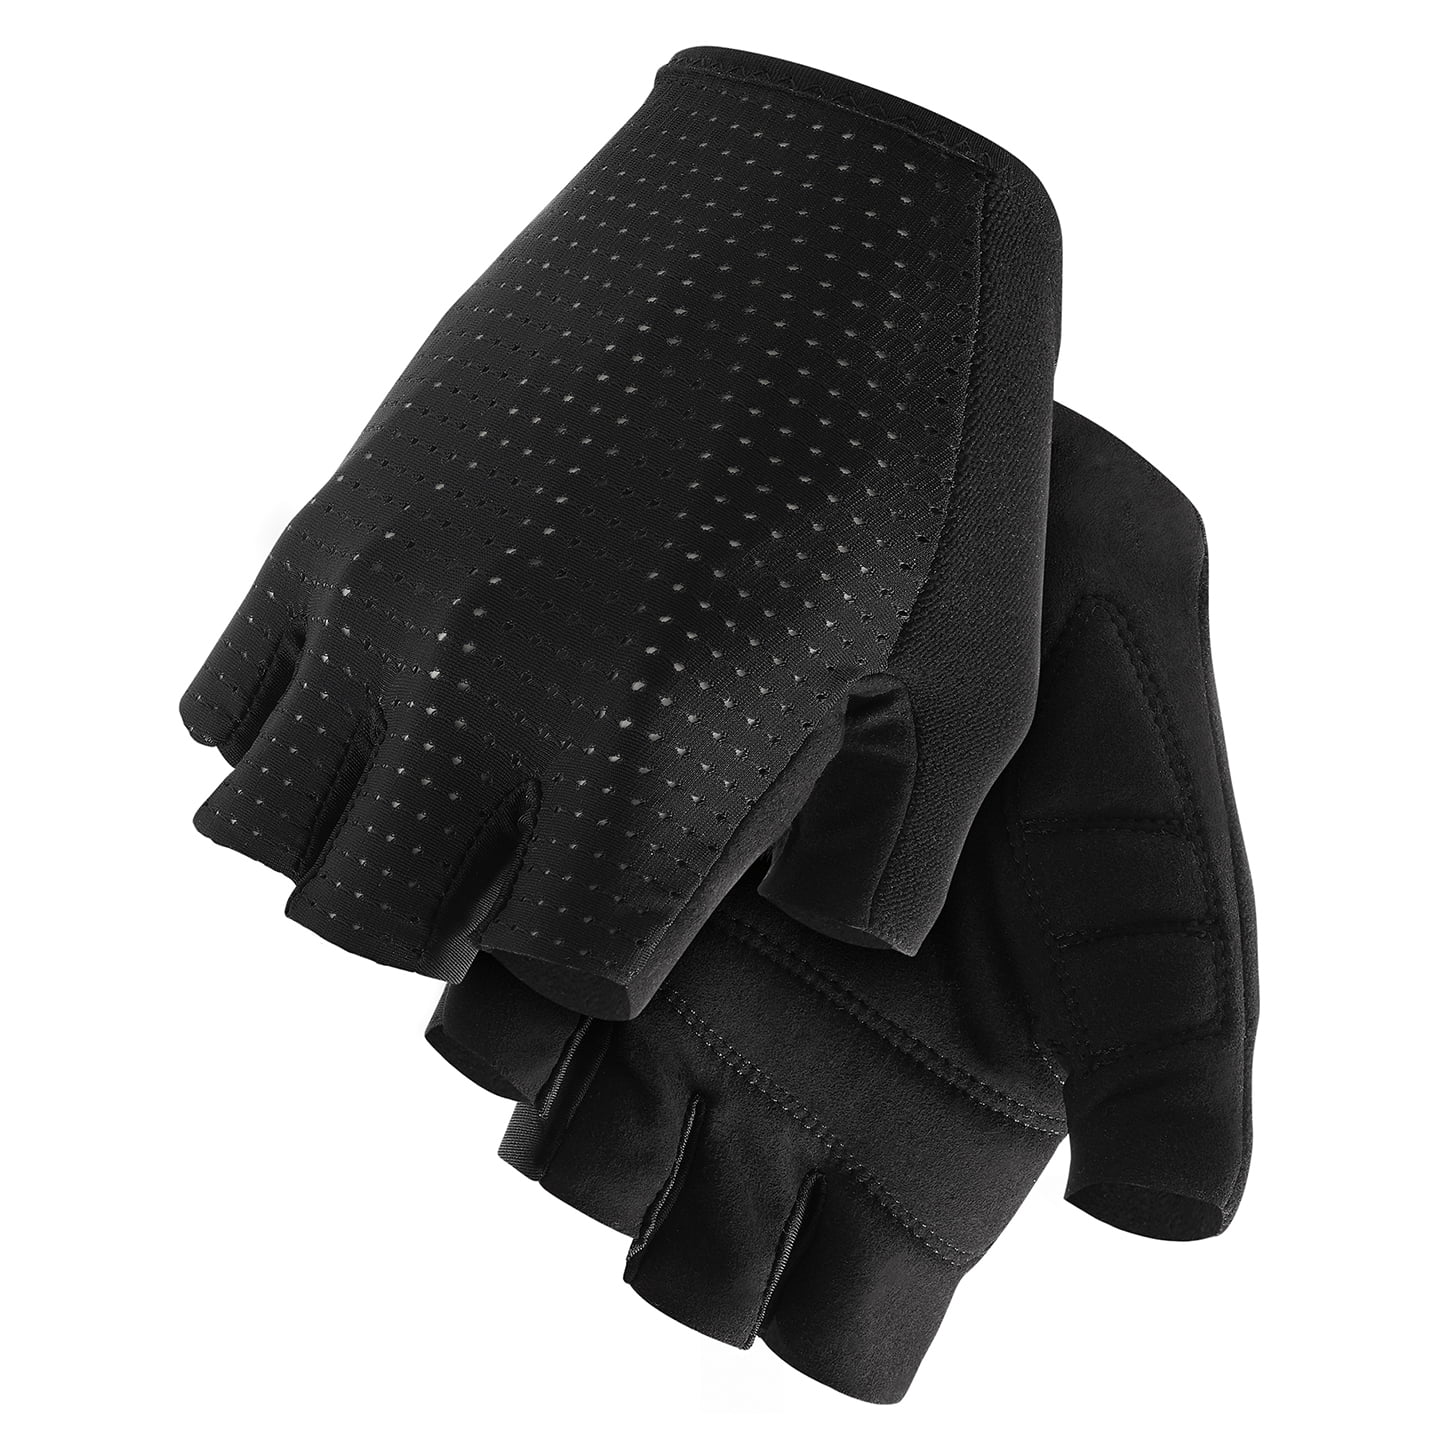 GT C2 Gloves, for men, size L, Cycling gloves, Bike gear